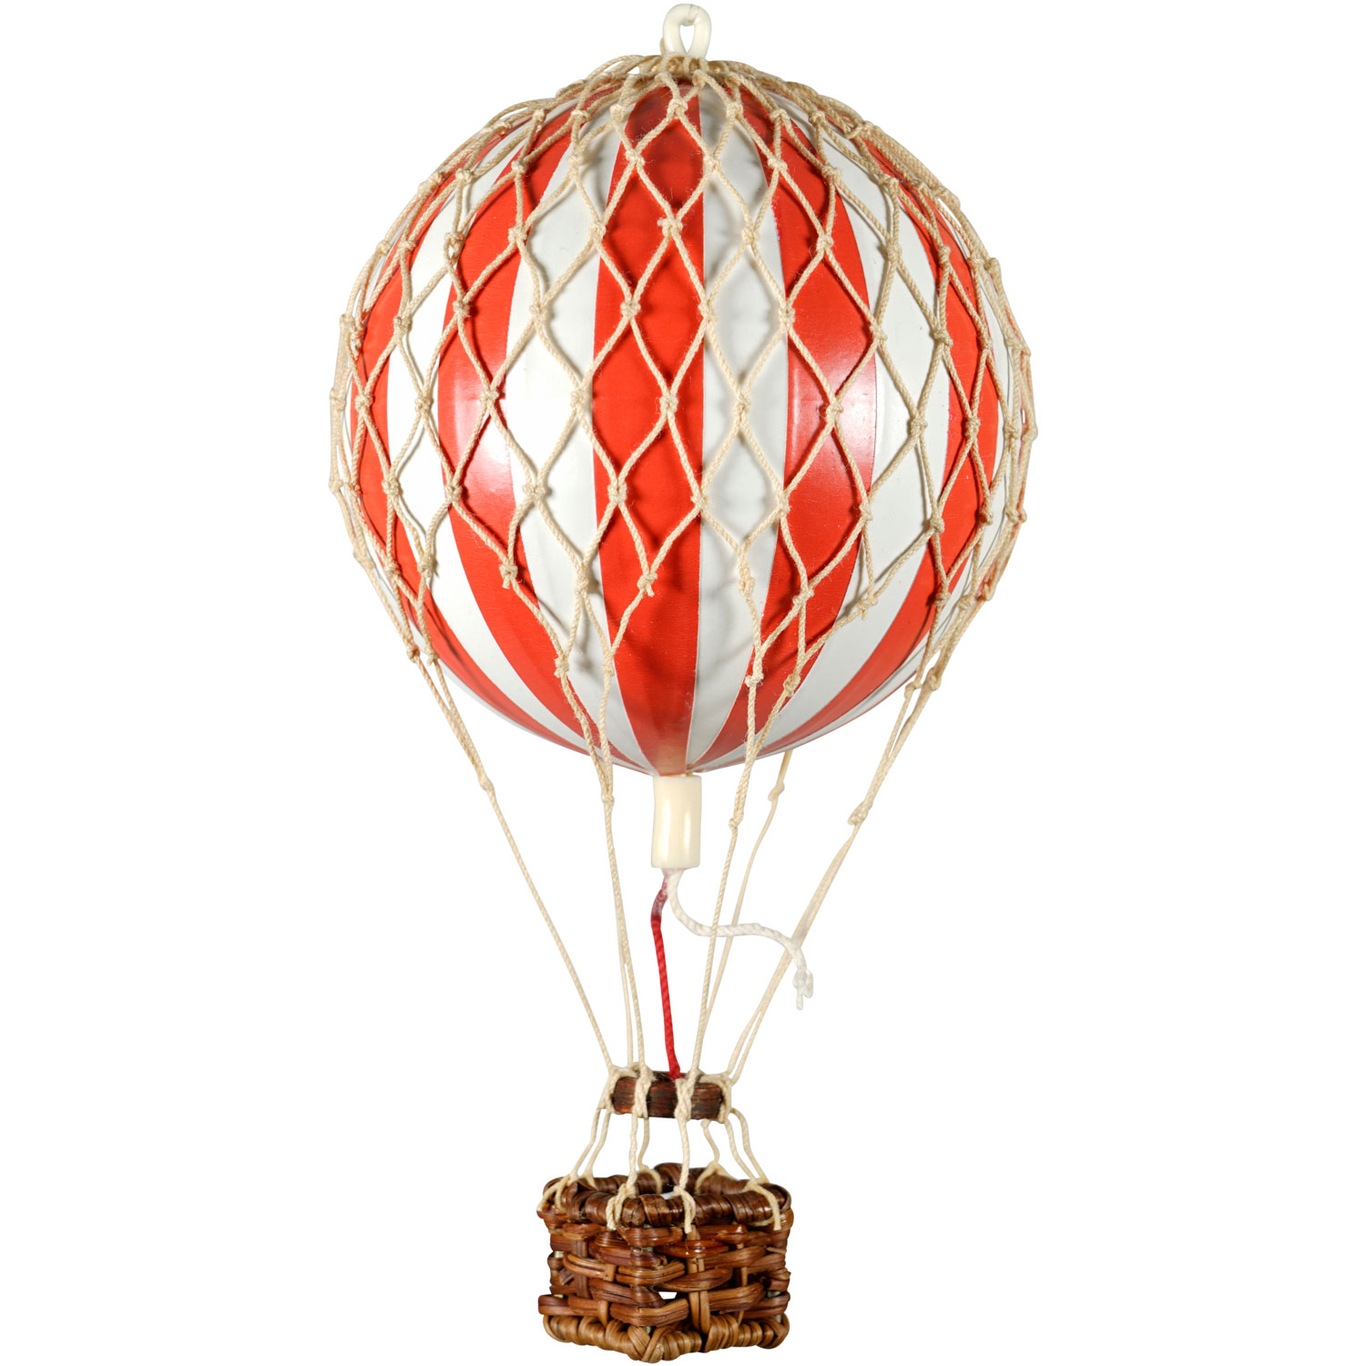 Floating The Skies Luftballon 13x8.5 cm, Rød / Hvid